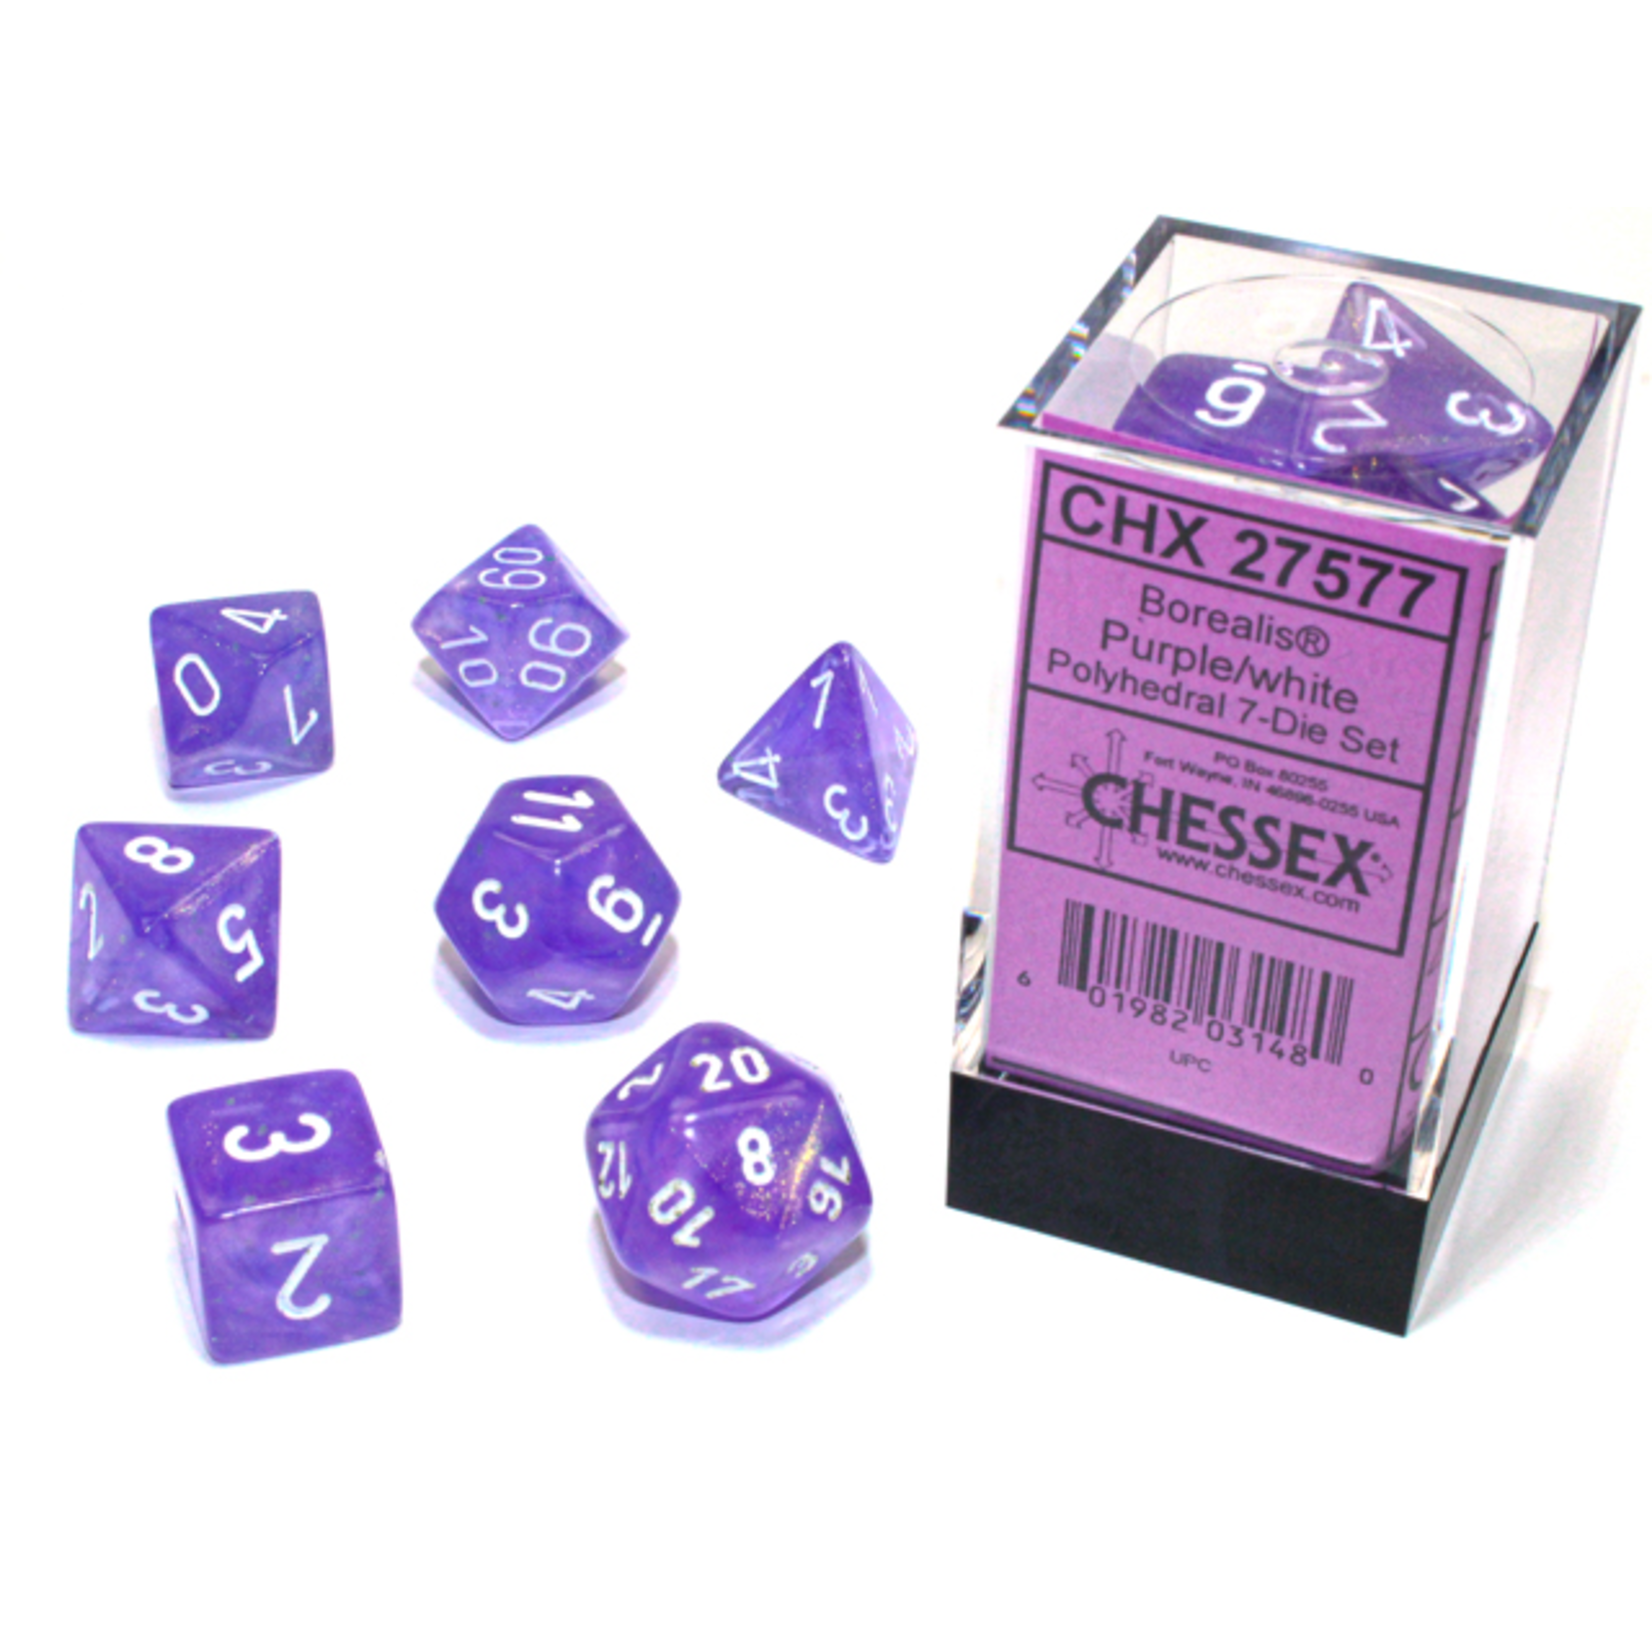 Chessex 7-Piece Dice Set: Borealis Luminary Purple with White Numbers